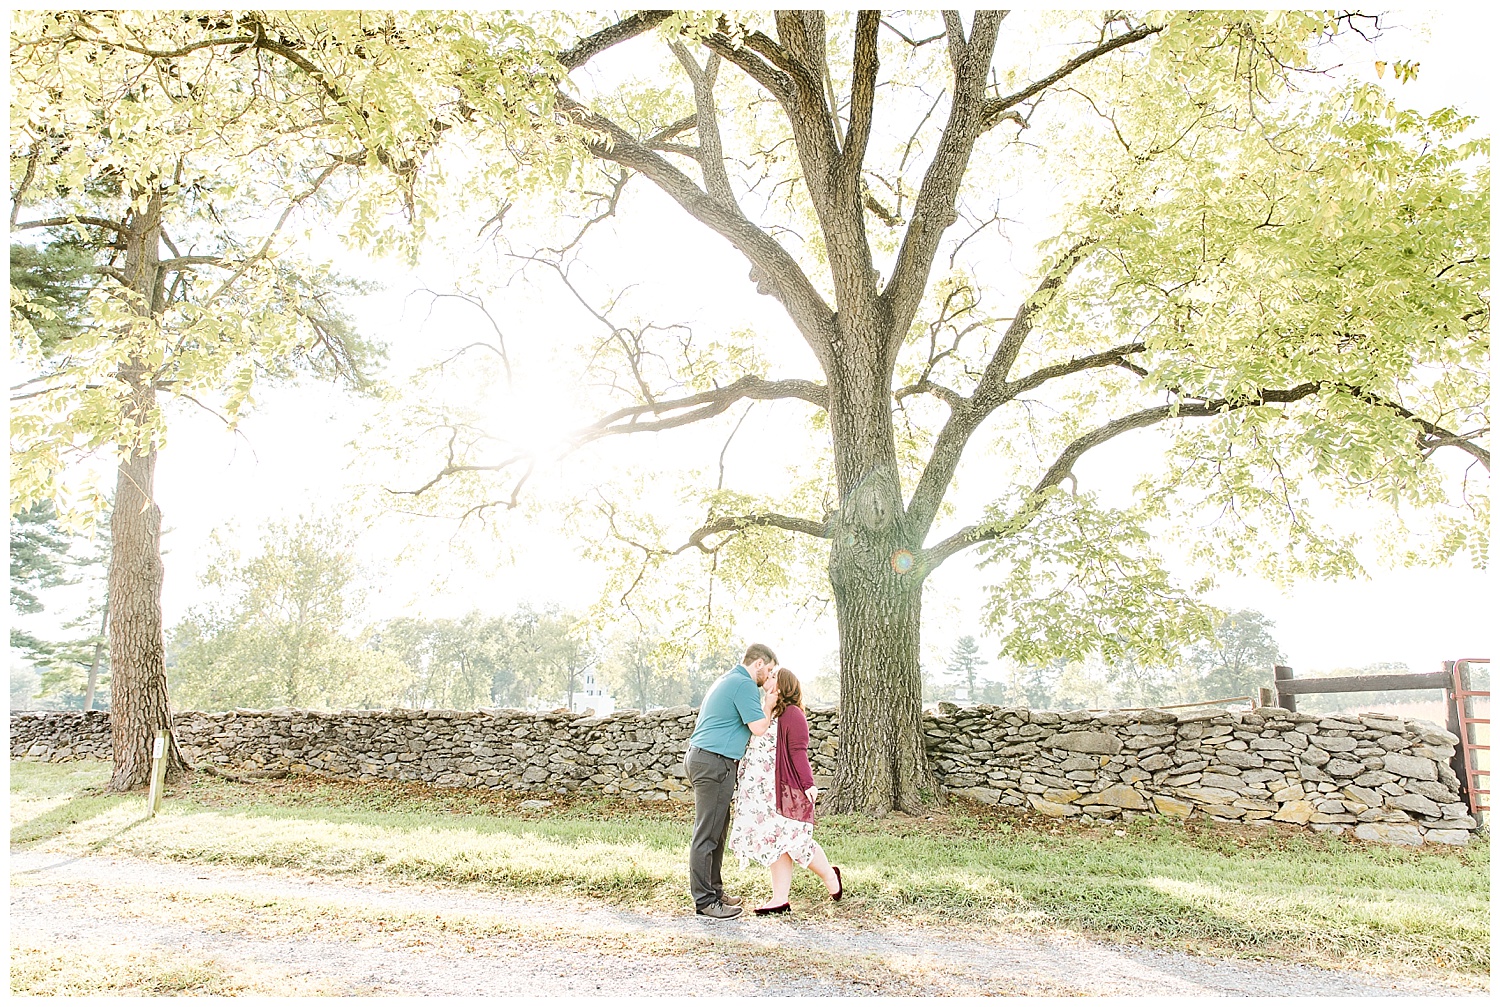 State Arboretum of Virginia. Rebecca Dotson Photography. Engagement.